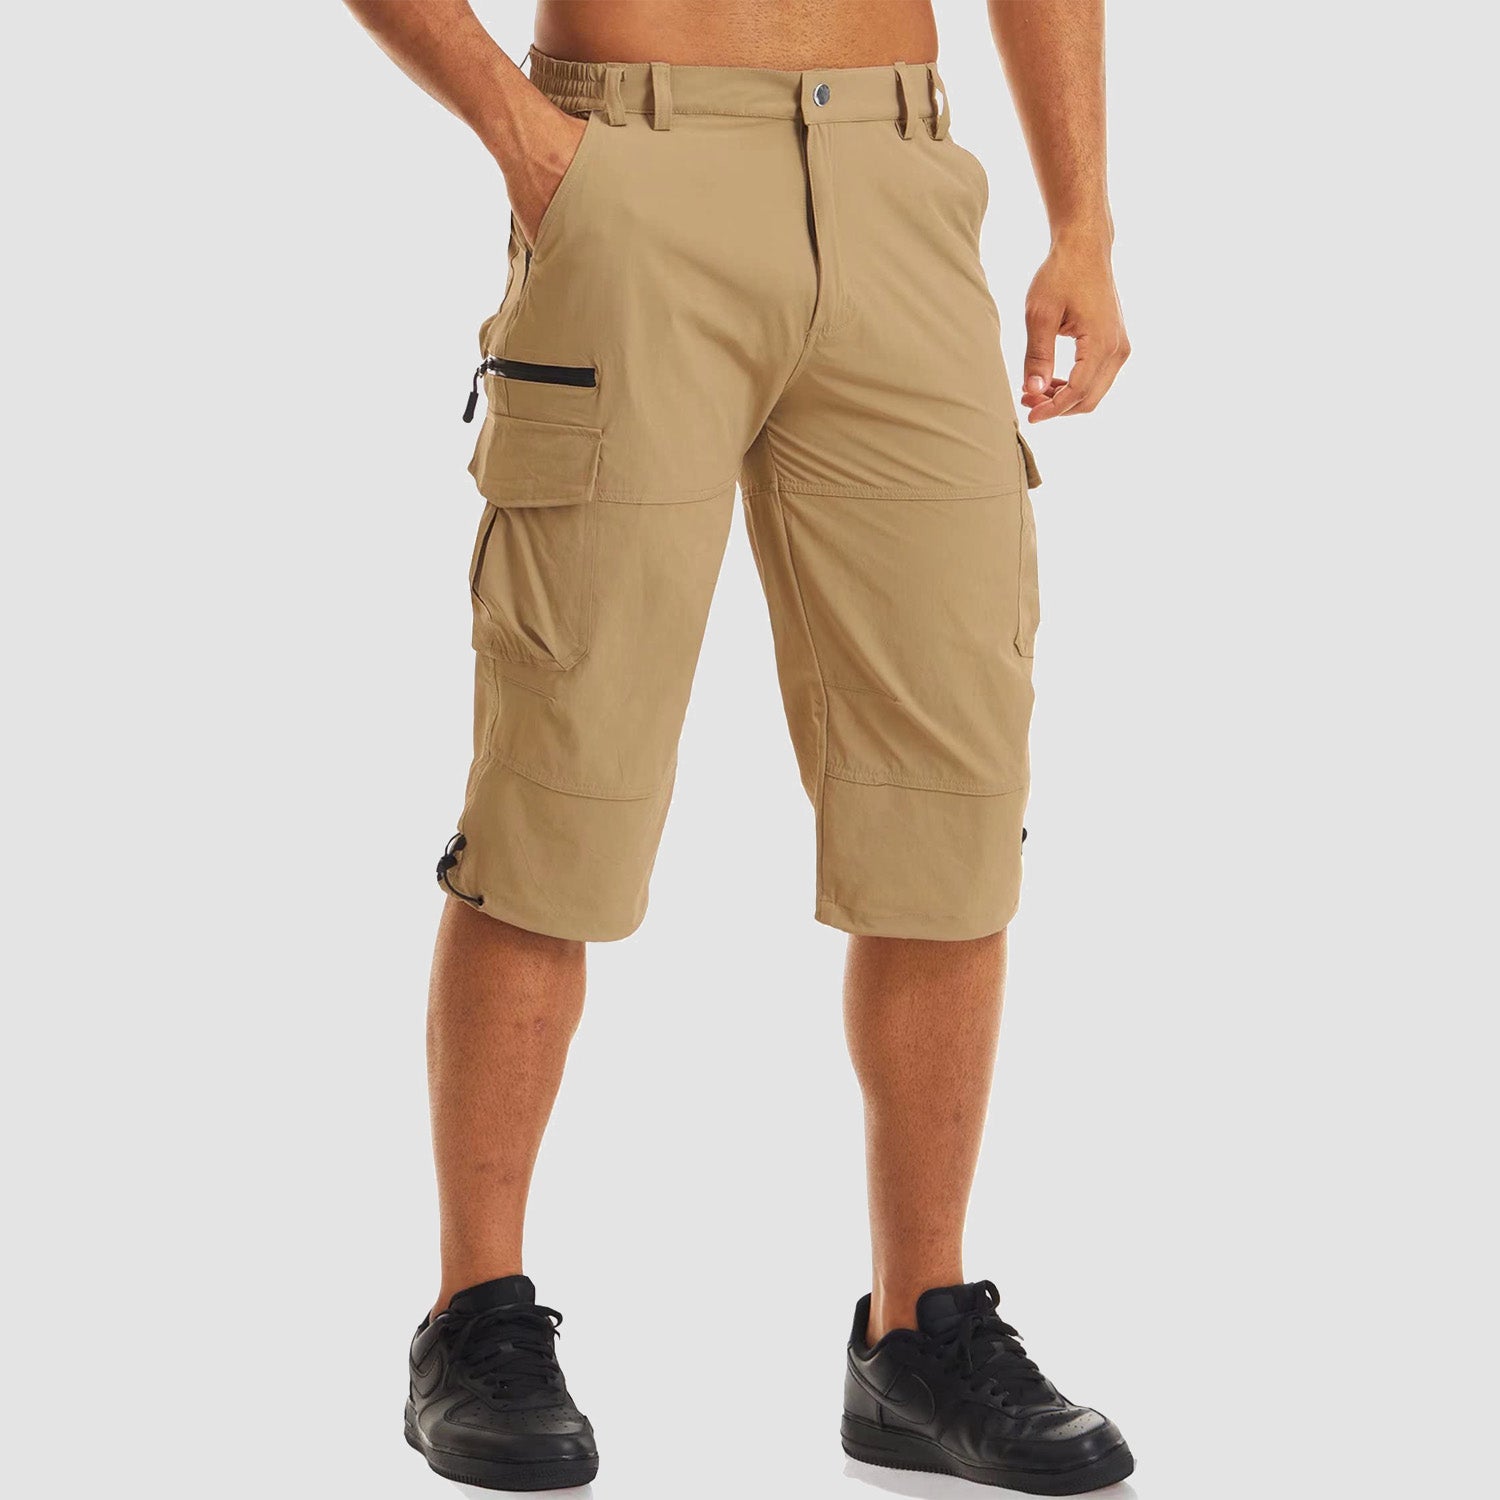 HOPATISEN Men's 3/4 Capri Mountain Shorts Cargo Shorts for Men Big Tall  Hiking Camping Military Knee-Length Shorts with 7 Pockets Army Green |  Amazon.com